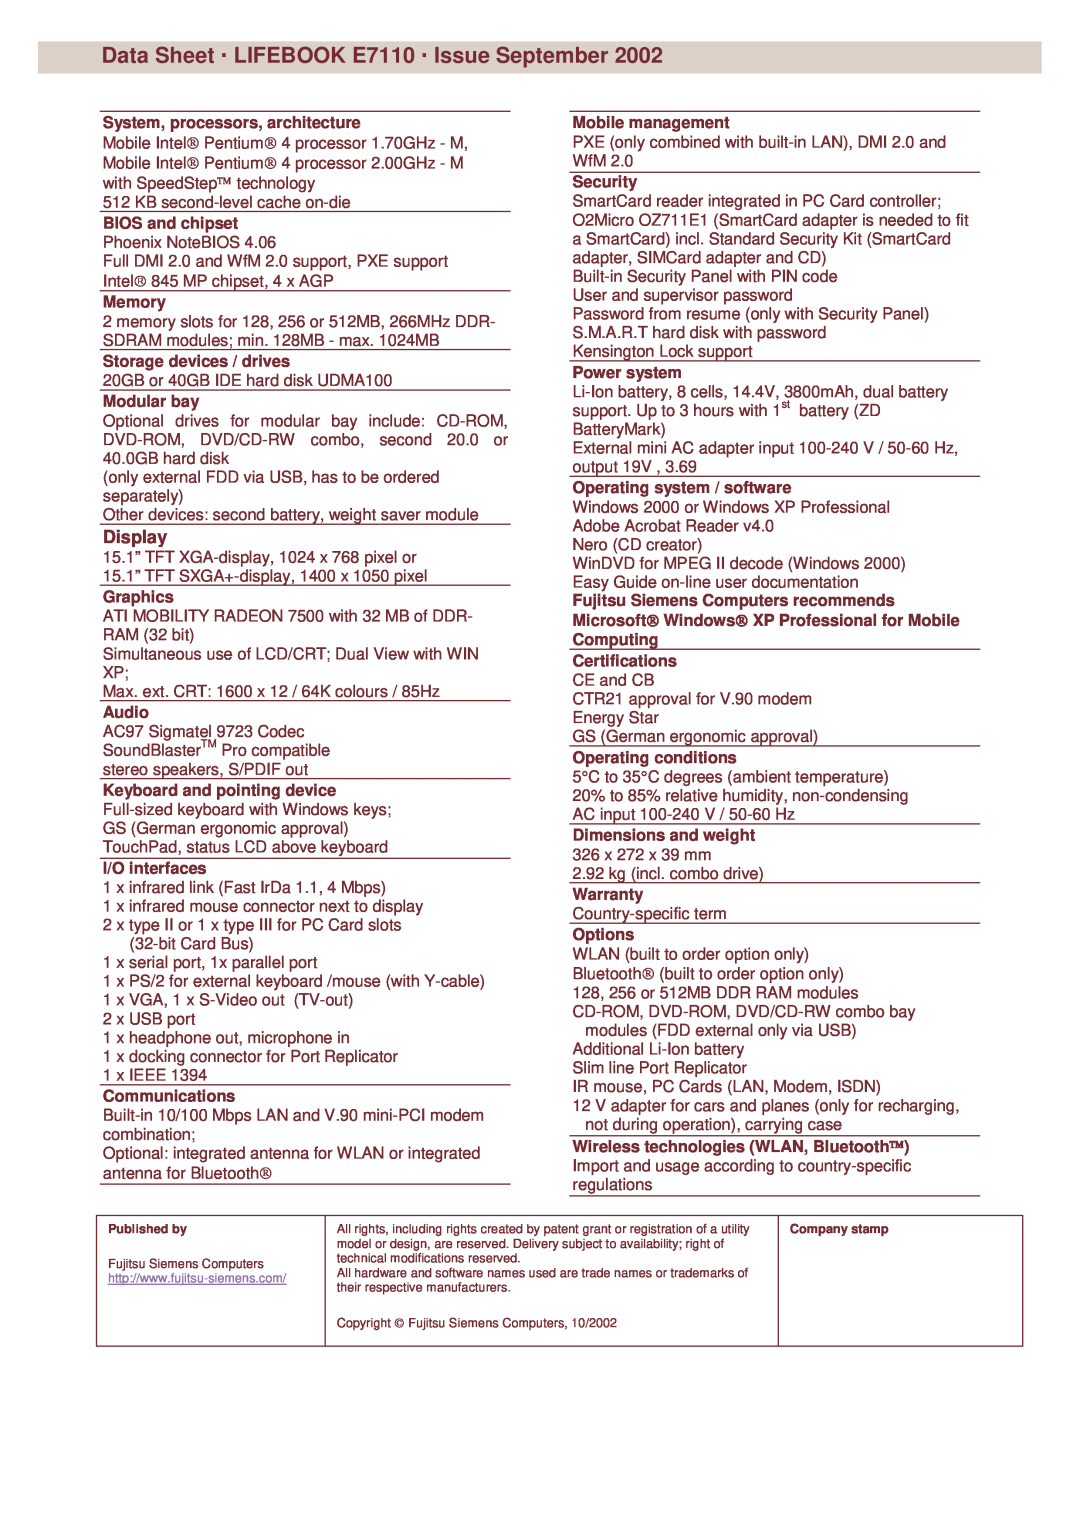 Fujitsu Siemens Computers manual Data Sheet # LIFEBOOK E7110 # Issue September, Display 